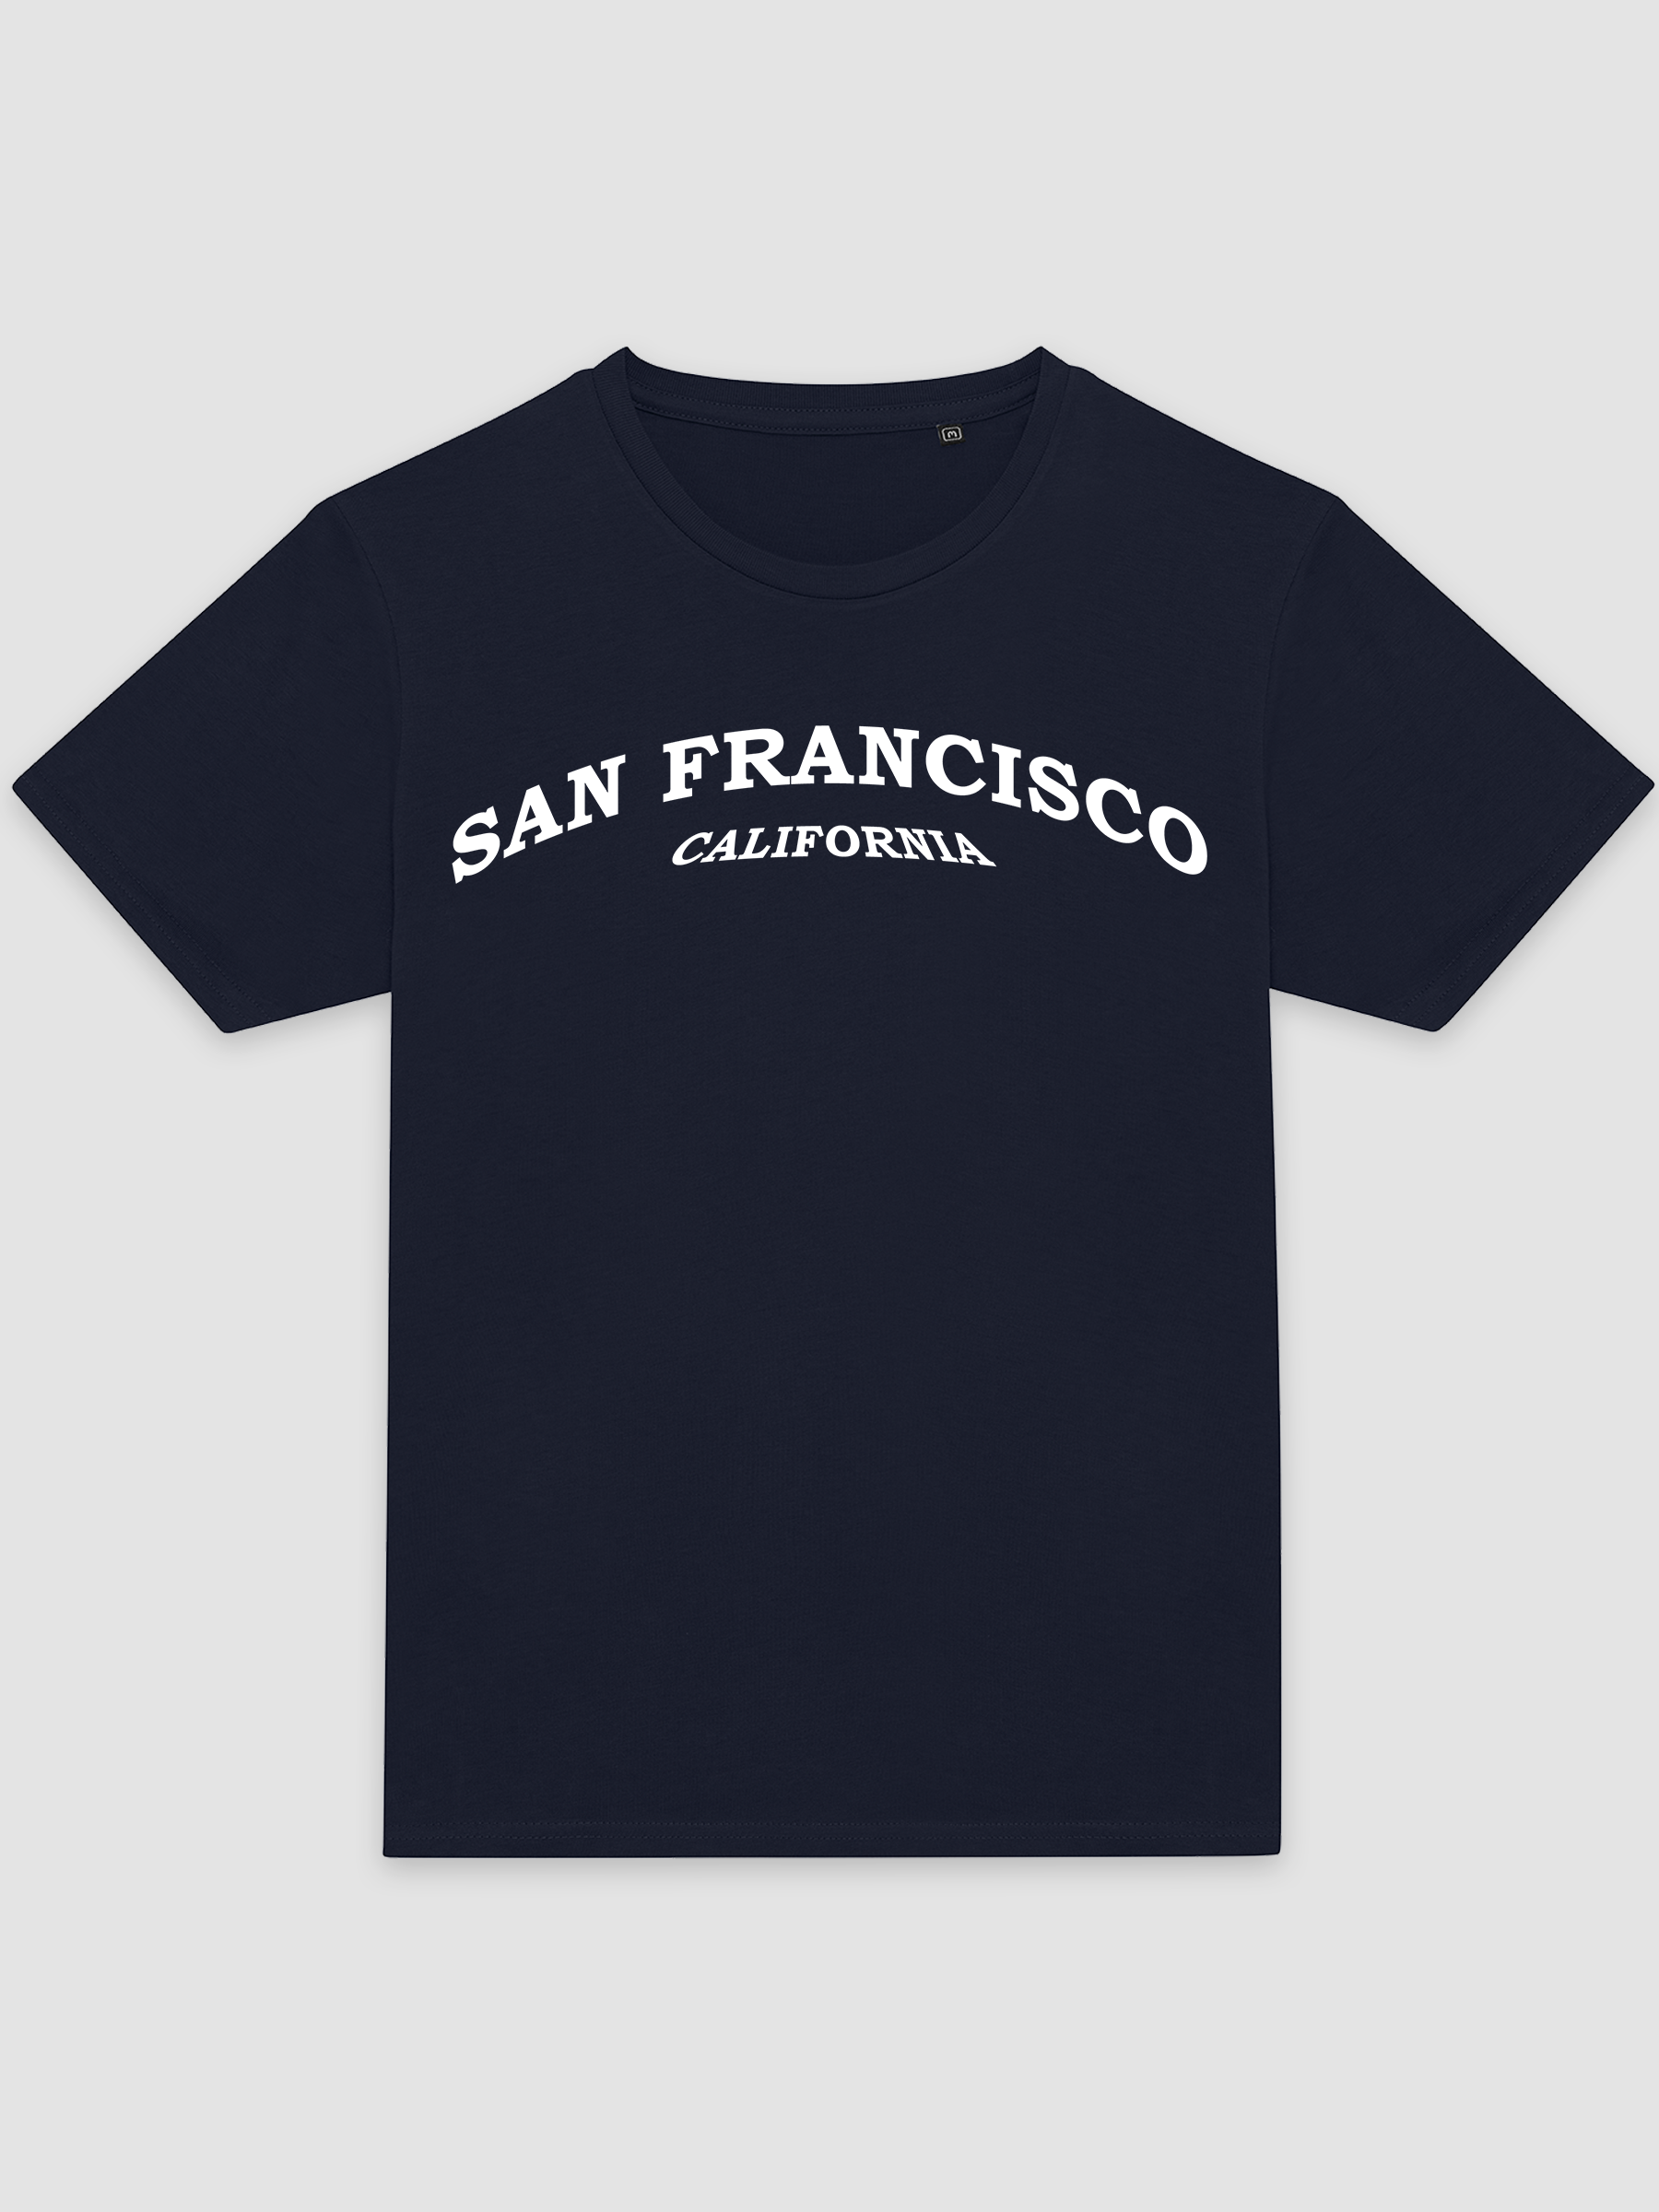 San Francisco - Navy T-Shirt